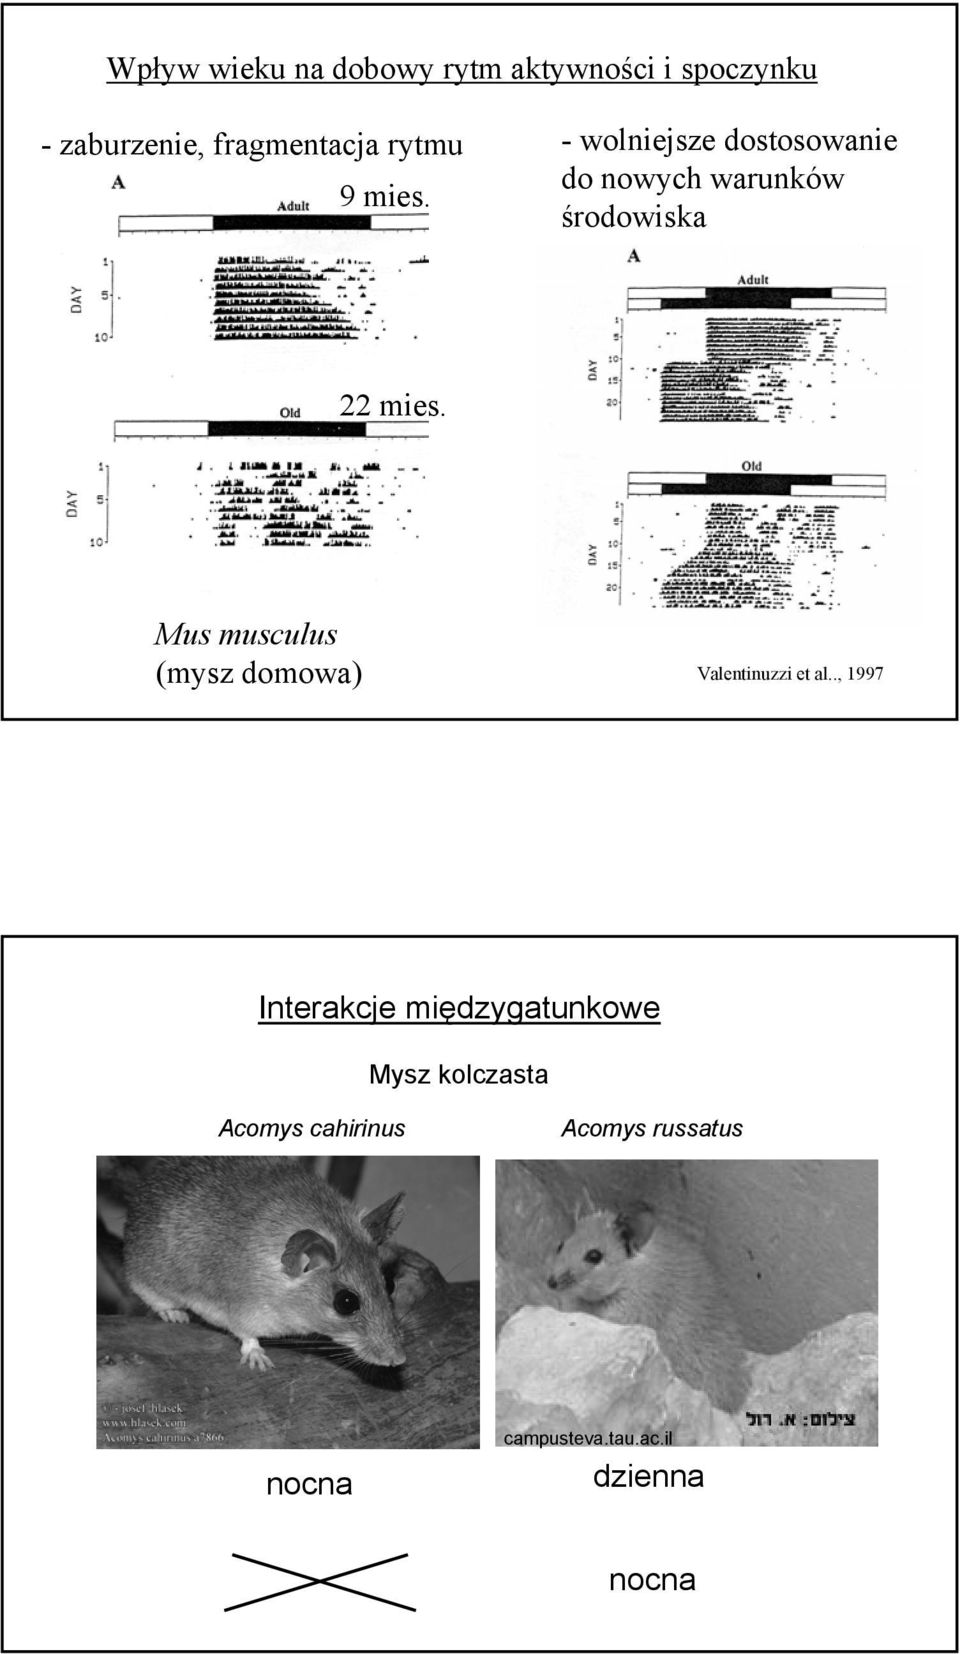 Mus musculus (mysz domowa) Valentinuzzi et al.